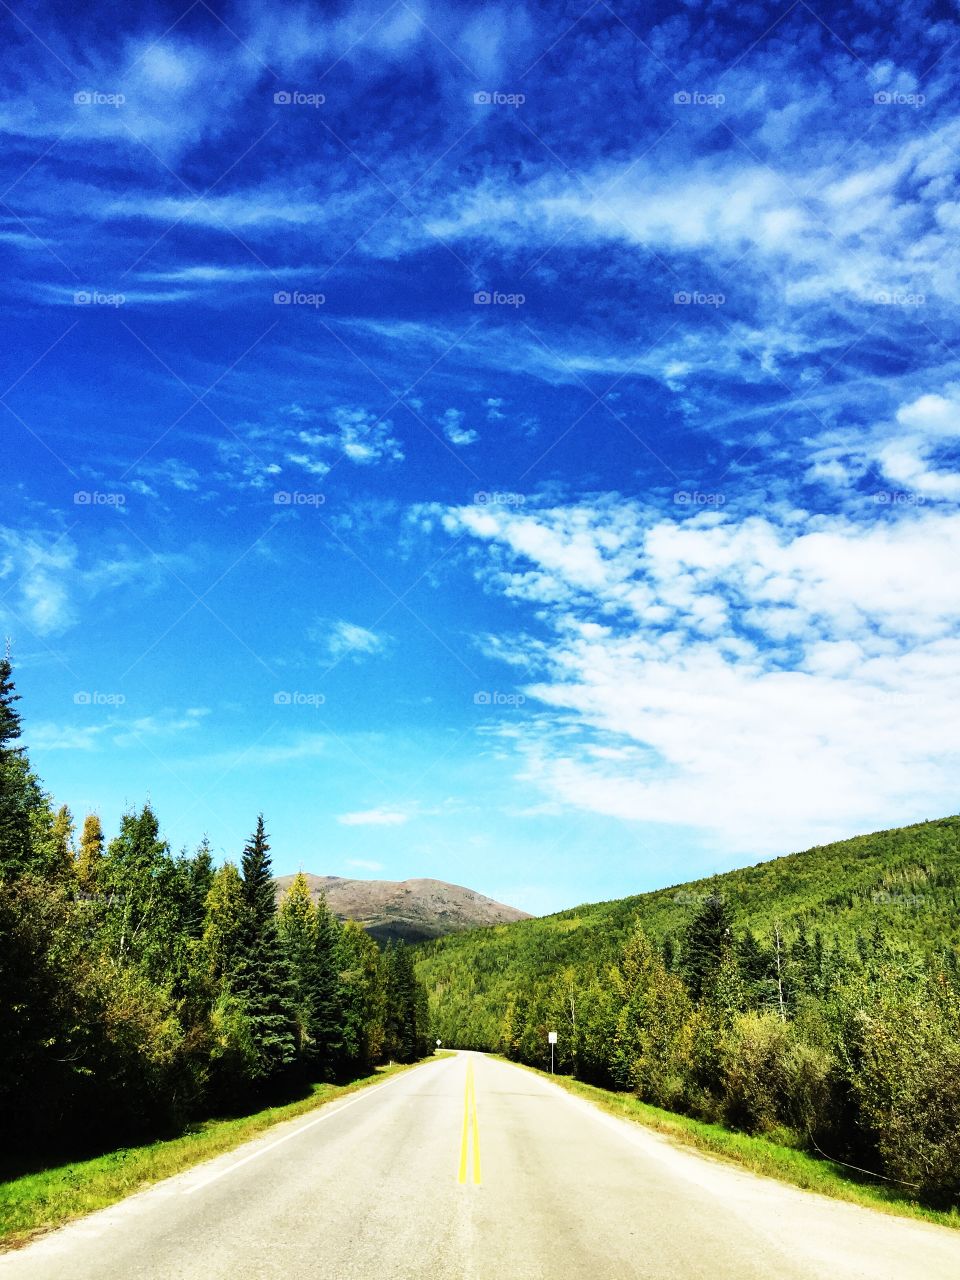 Alaska highway 